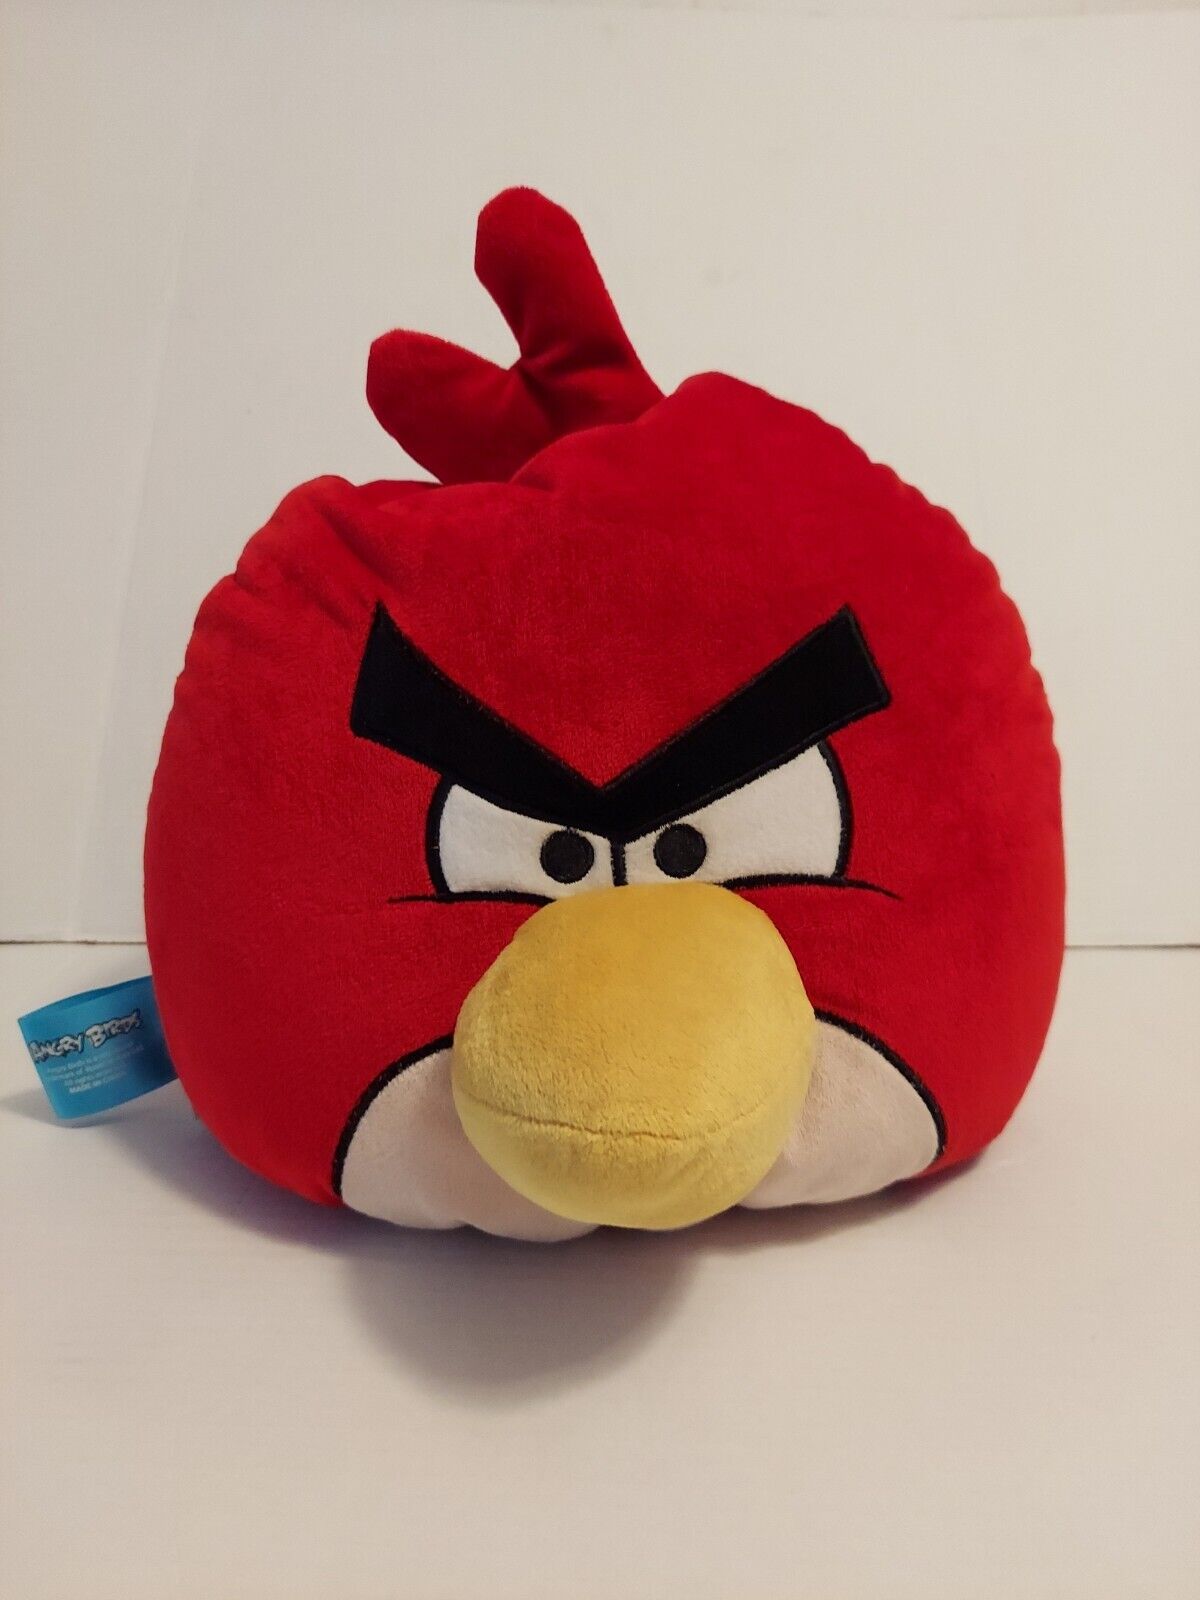 Large Angry Birds Red Plush Stuffed Animal 12